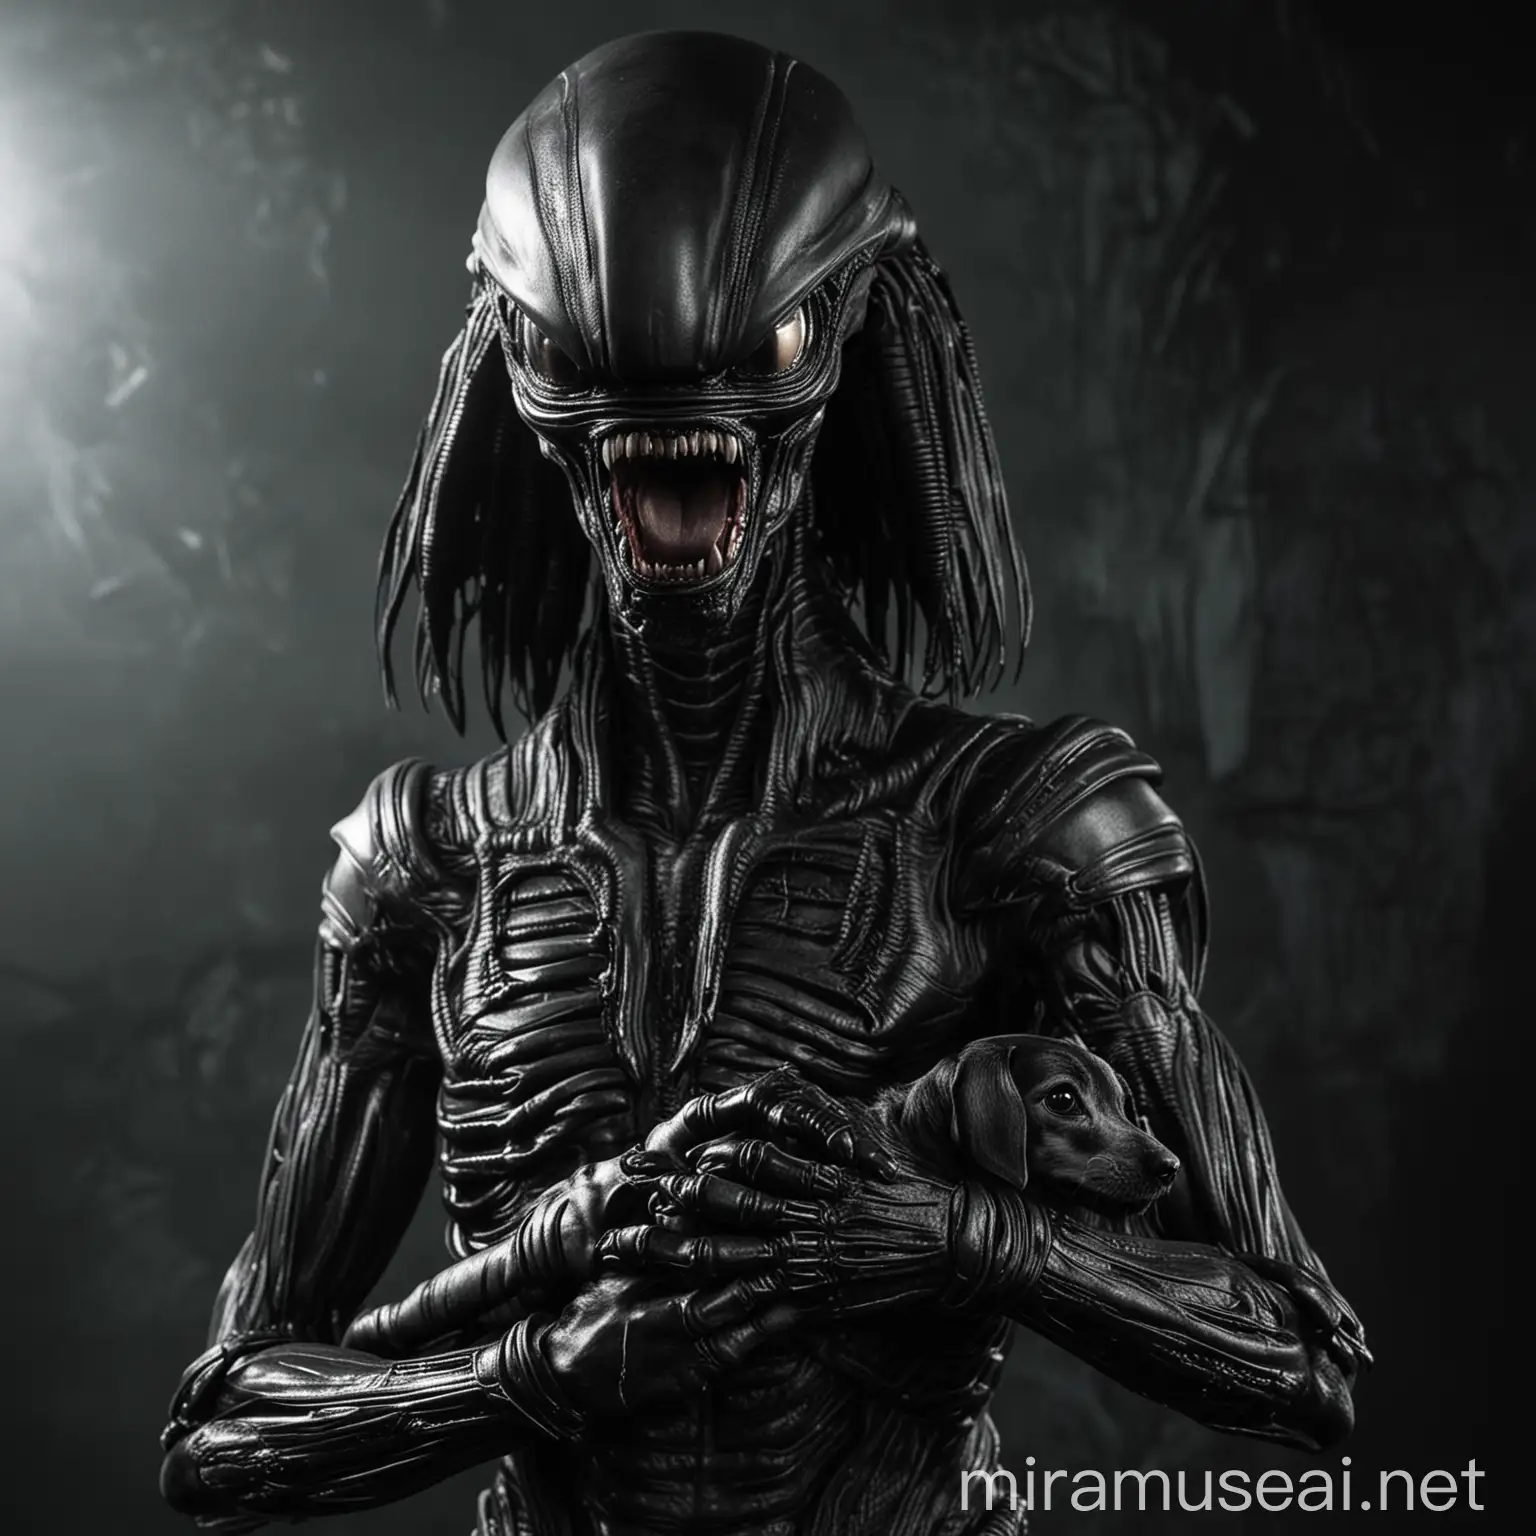 Xenomorph from the movie Alien holding a black Dachshund